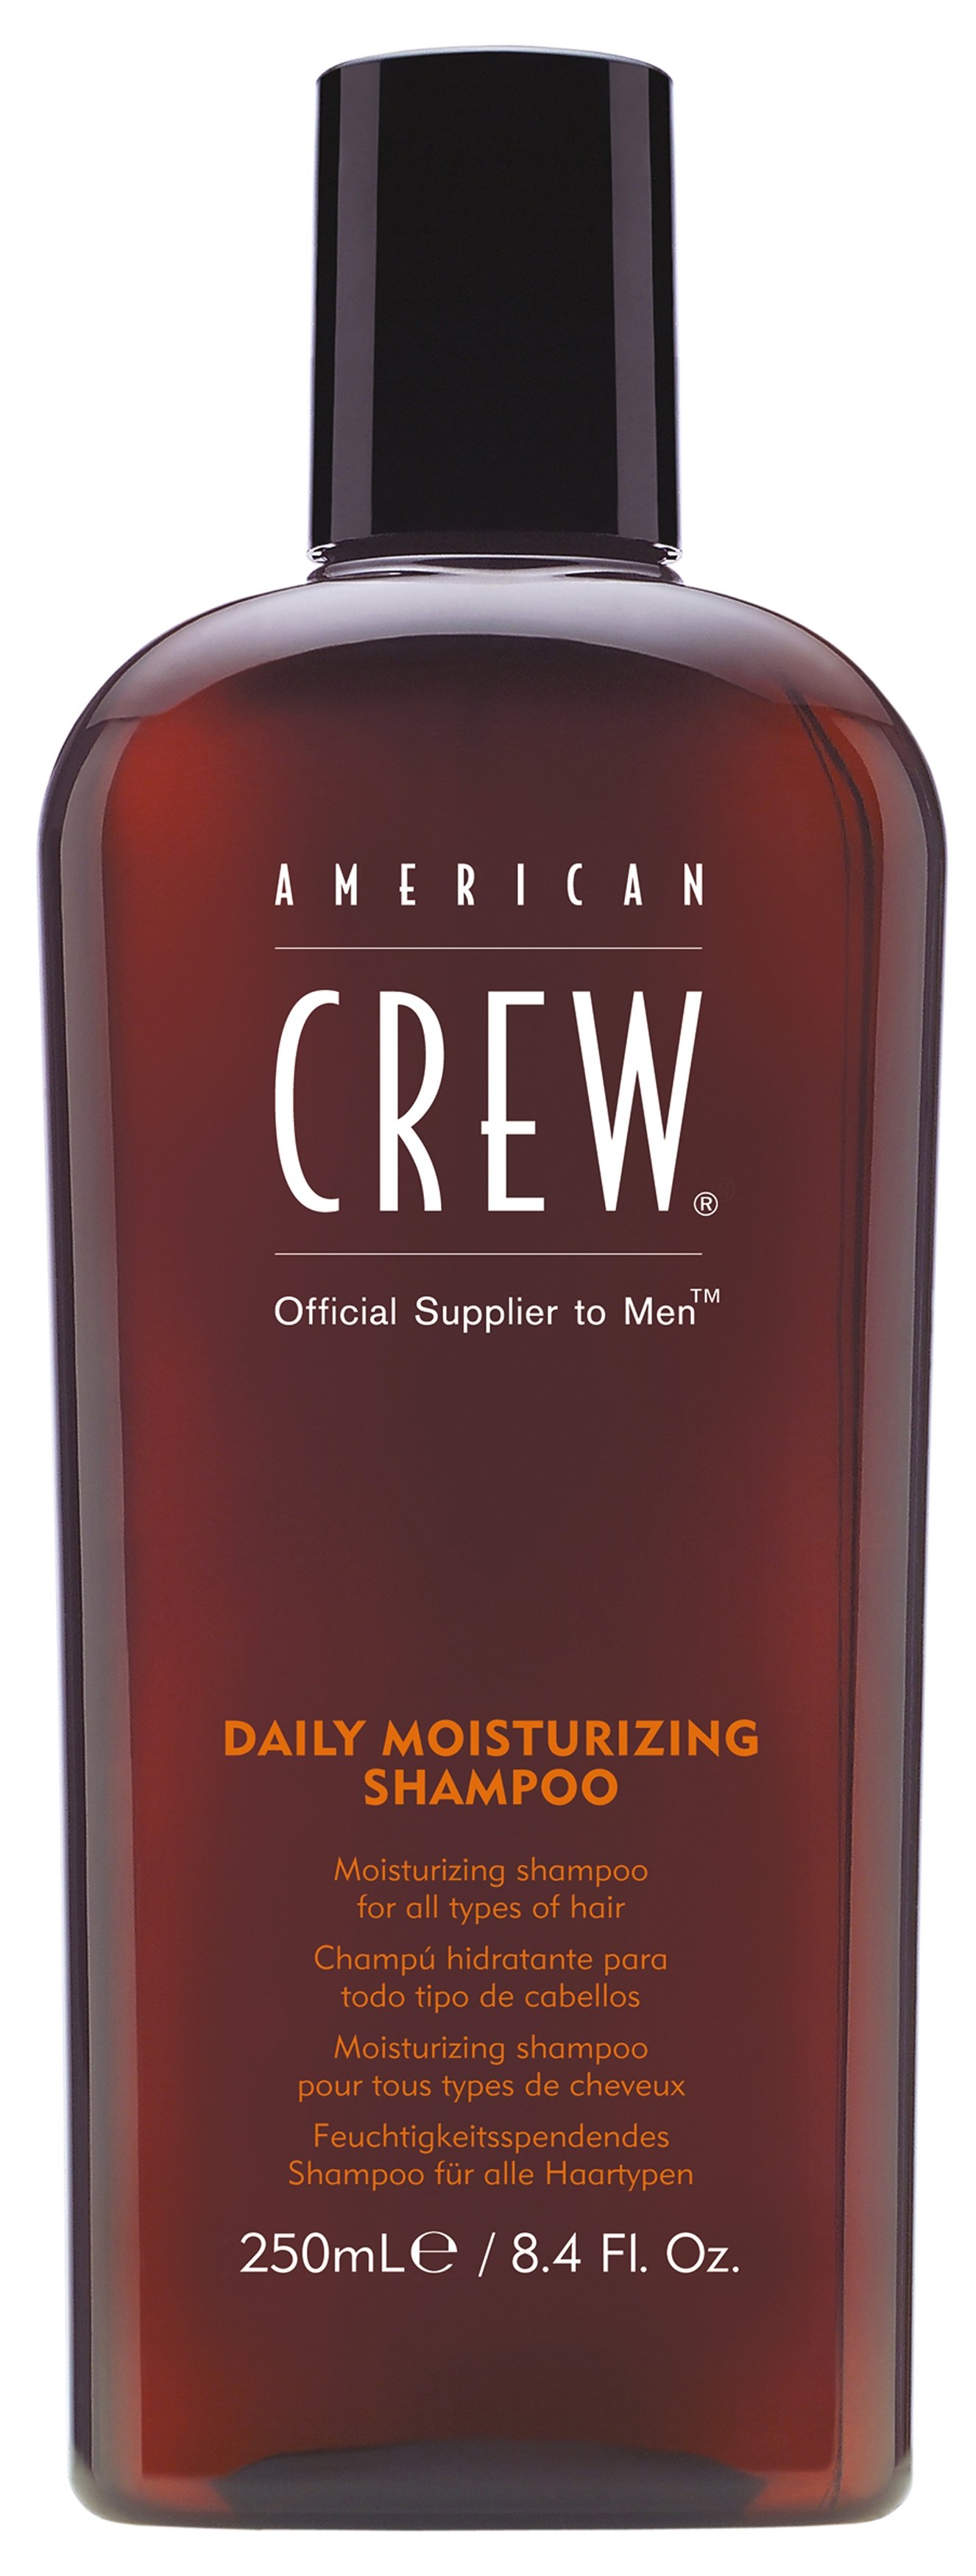 Мужские шампуни:  AMERICAN CREW -  Увлажняющий шампунь для ежедневного ухода за волосами American Crew Daily Moisturizing Shampoo (250 мл) (250 мл)